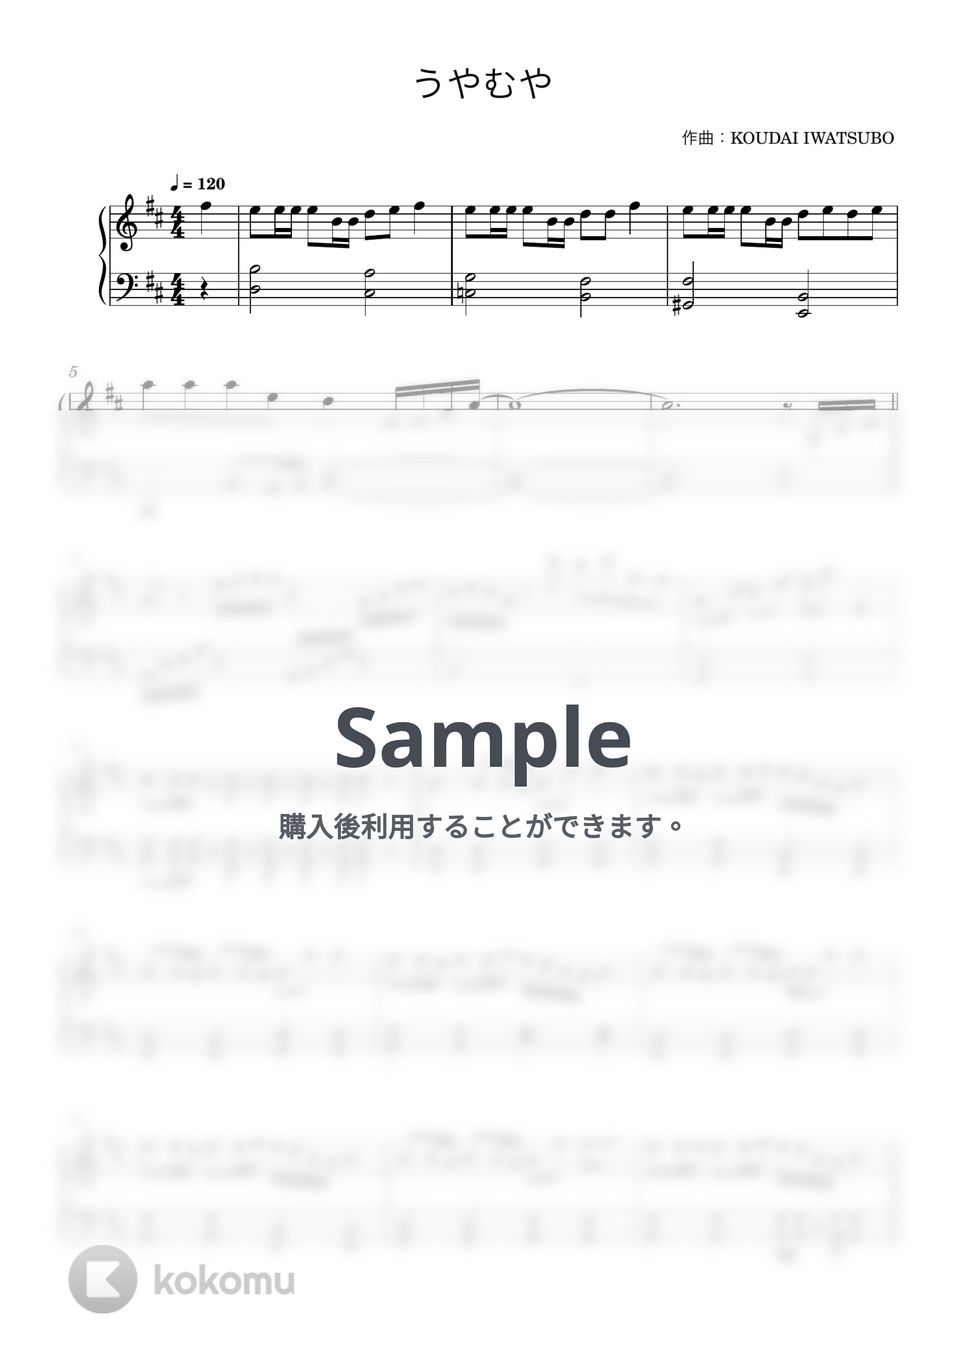 SixTONES - うやむや (ピアノ初心者向け) by Piano Lovers. jp